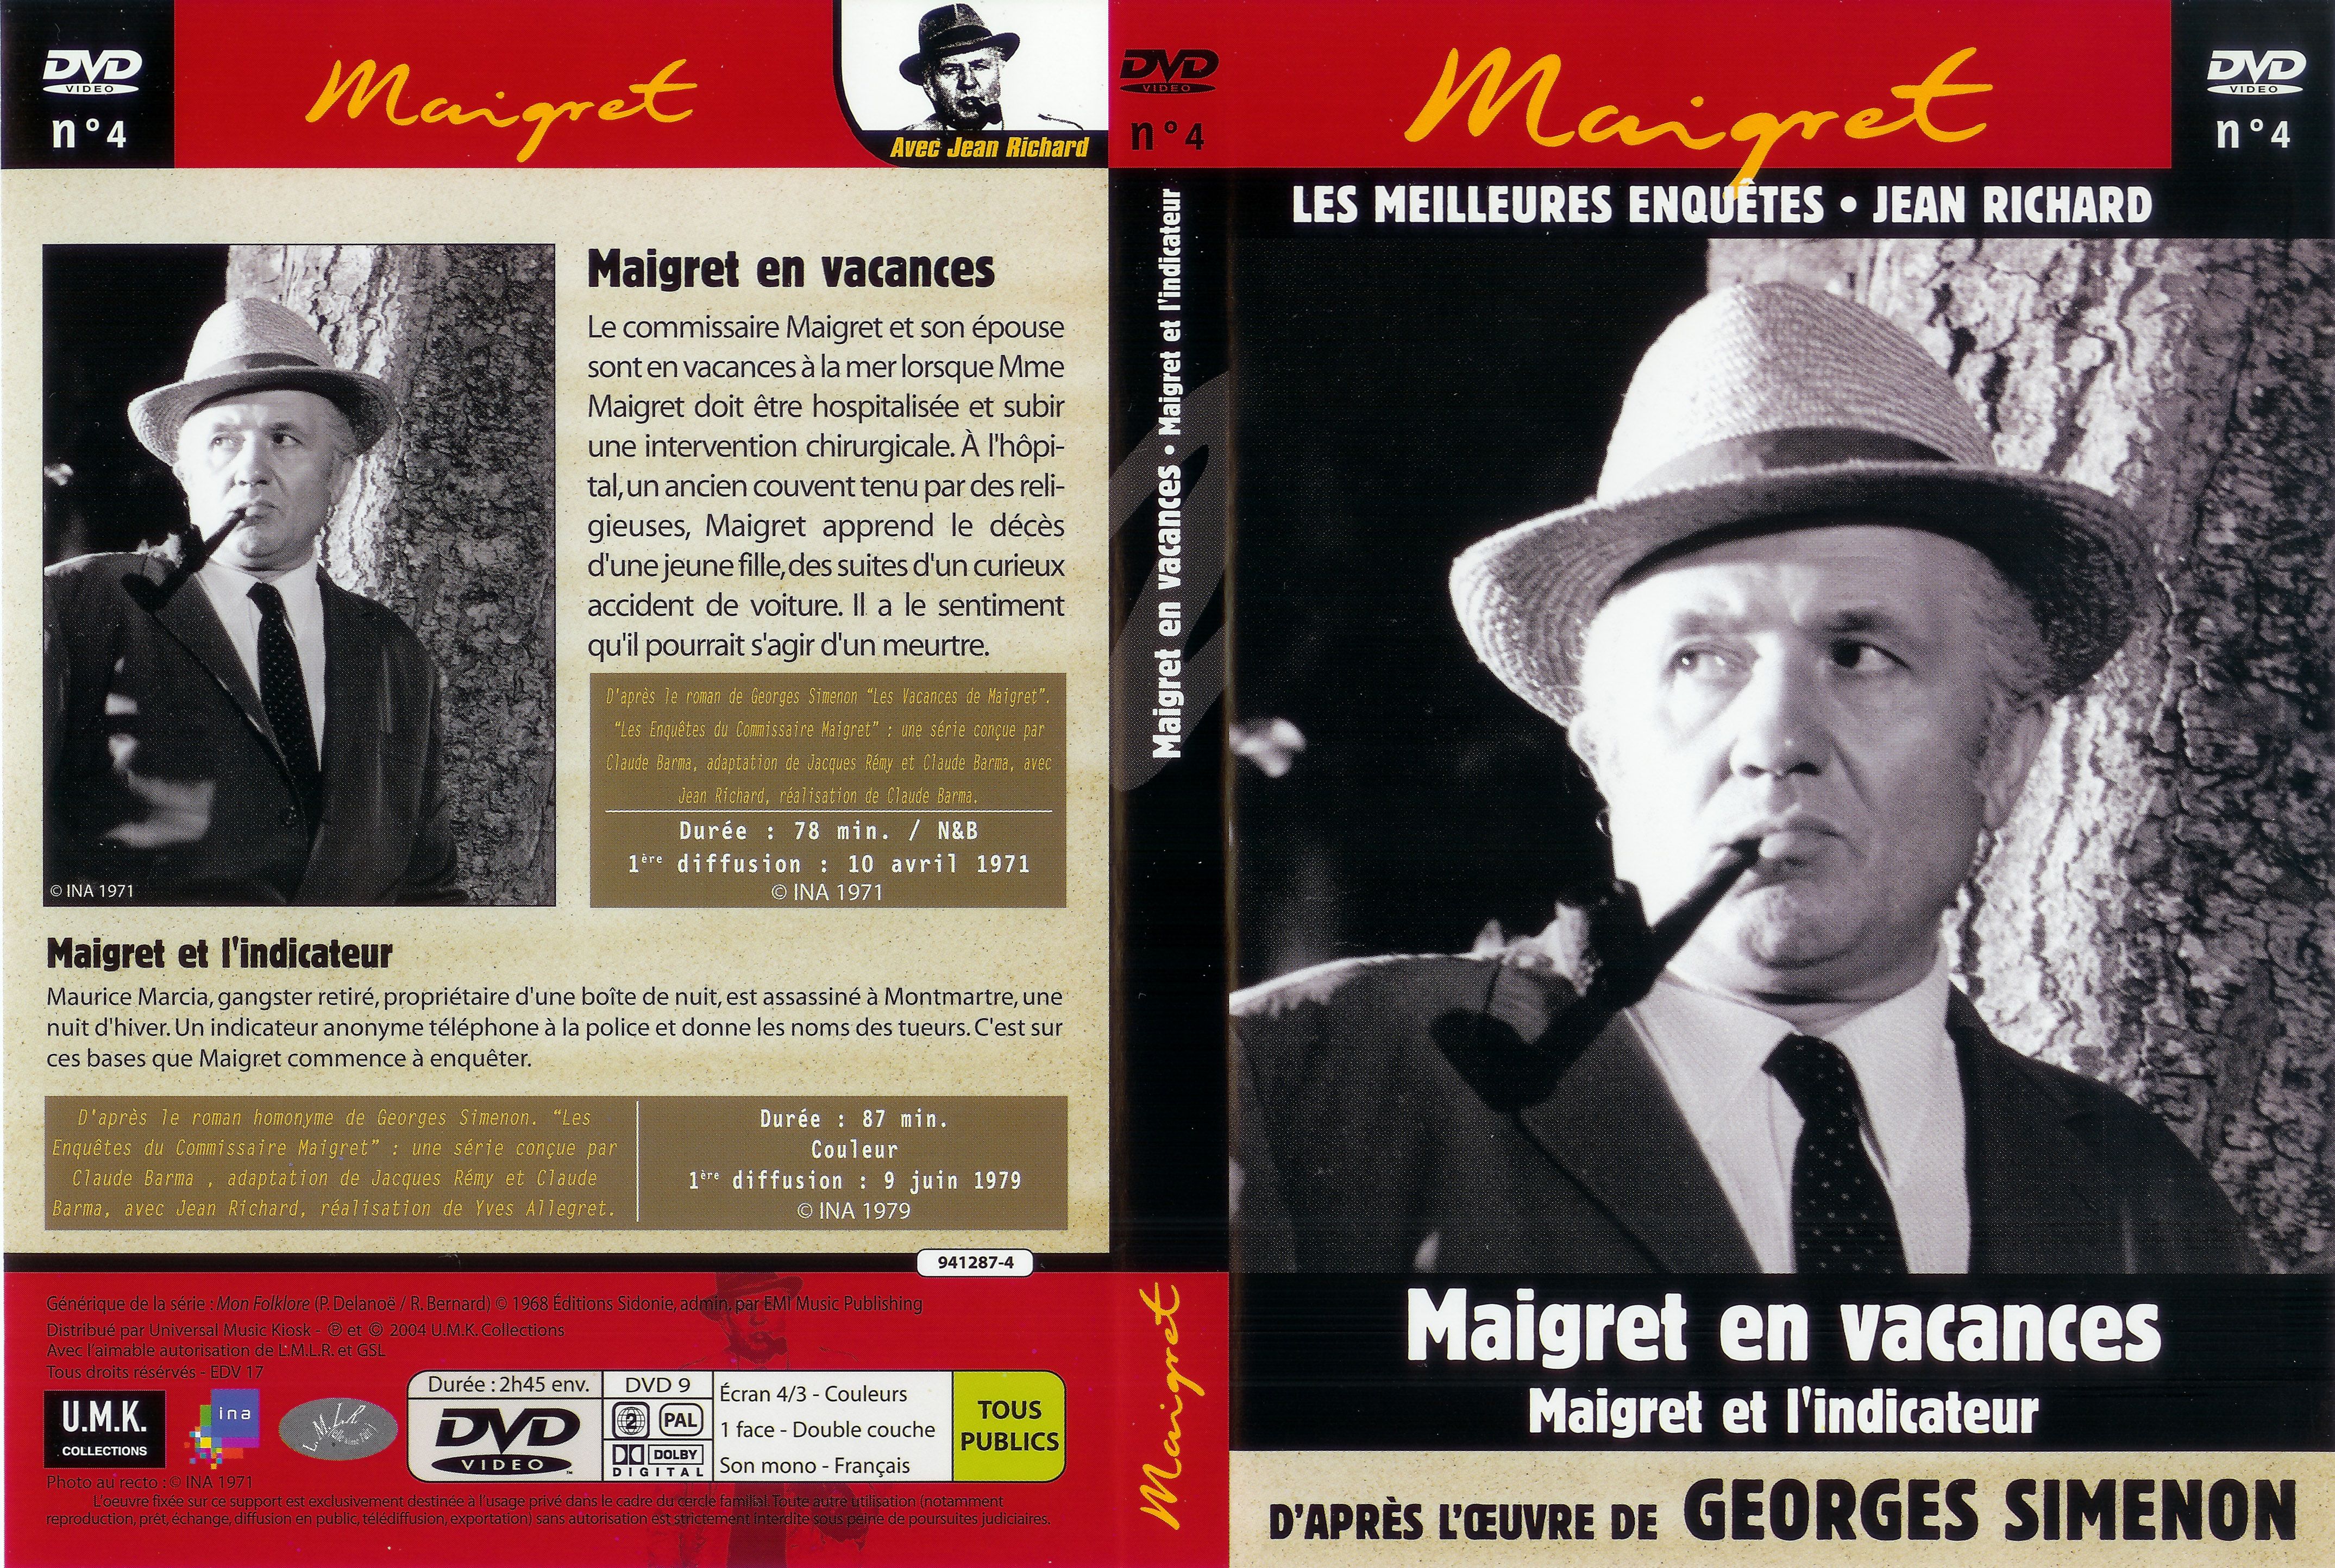 Jaquette DVD Maigret (Jean Richard) vol 04